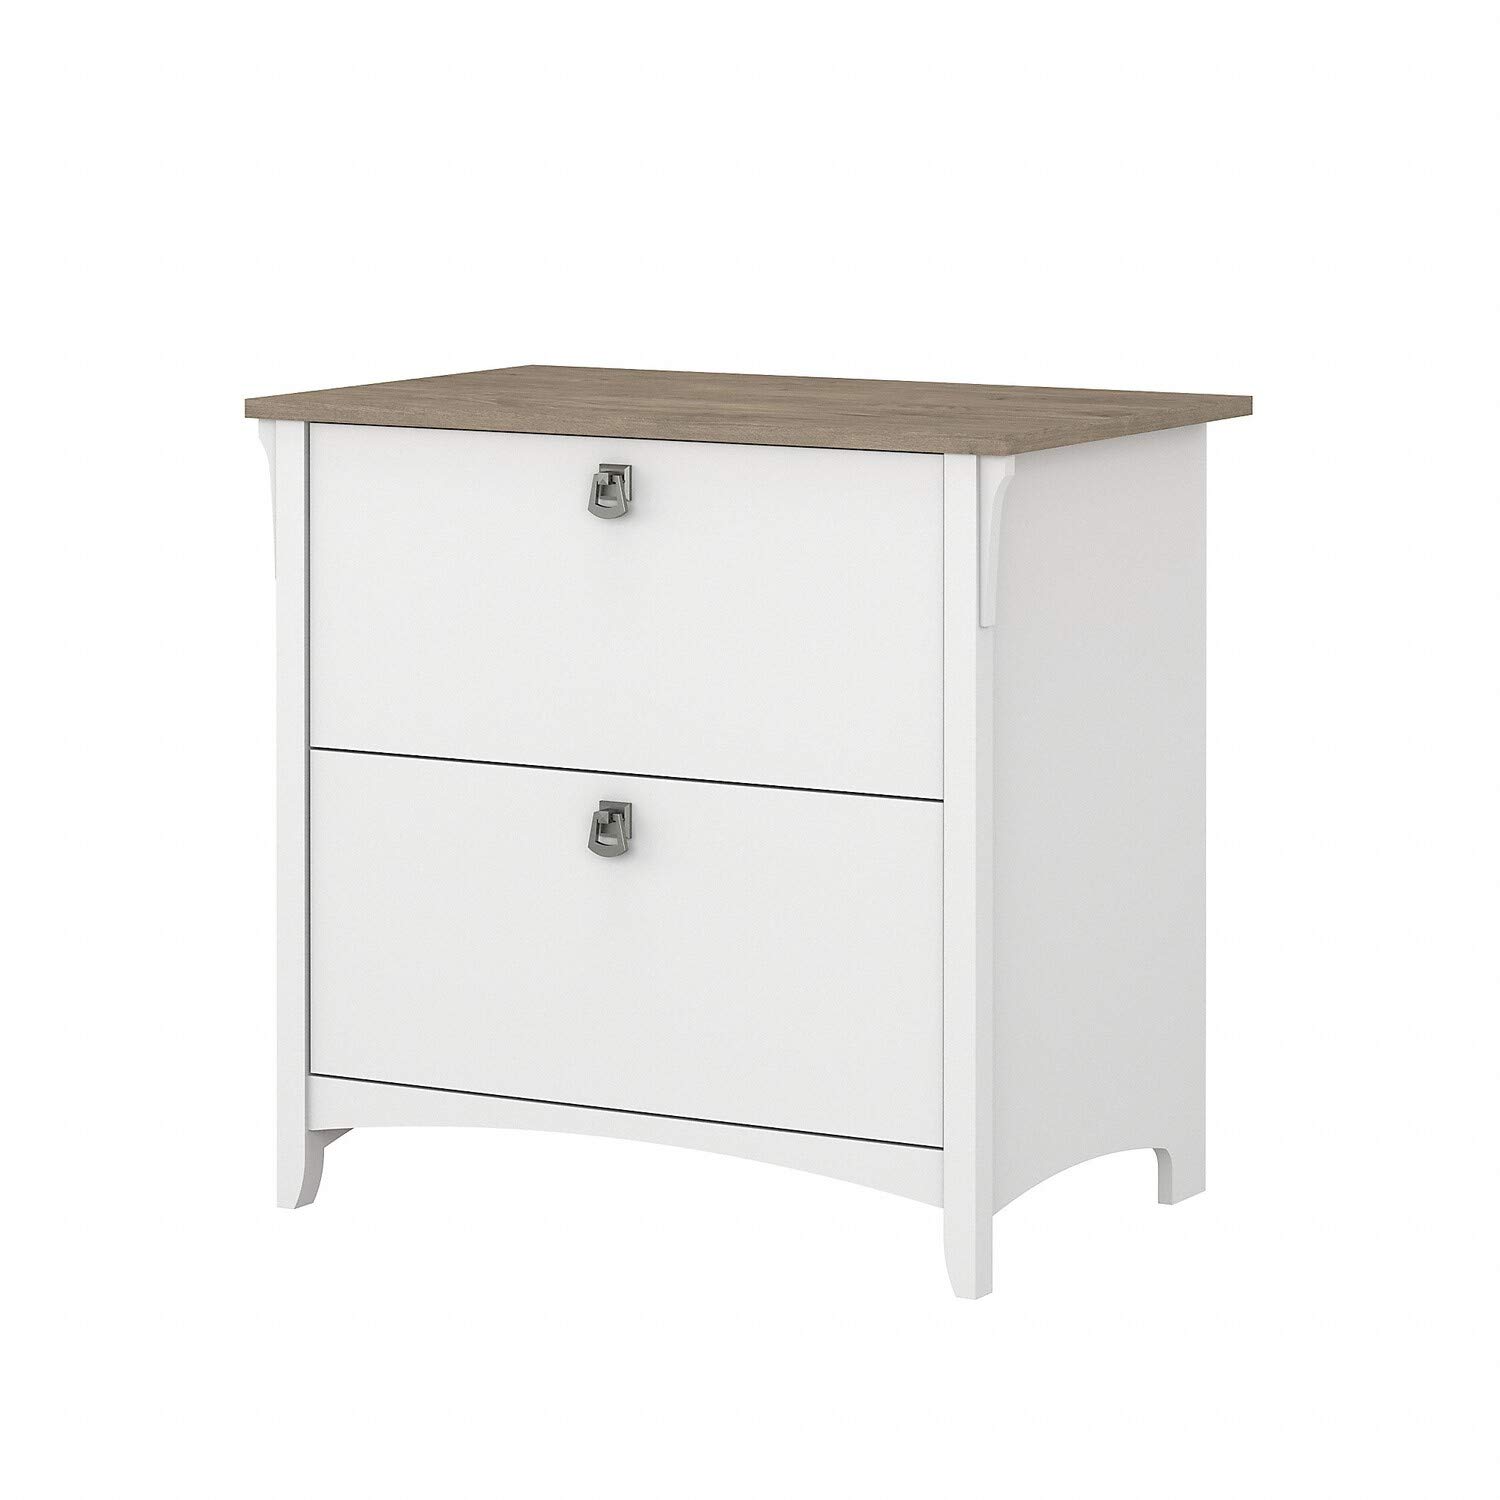 Bush Furniture Salinas 2 抽屉横向文件柜，纯白色和搭叠灰色...